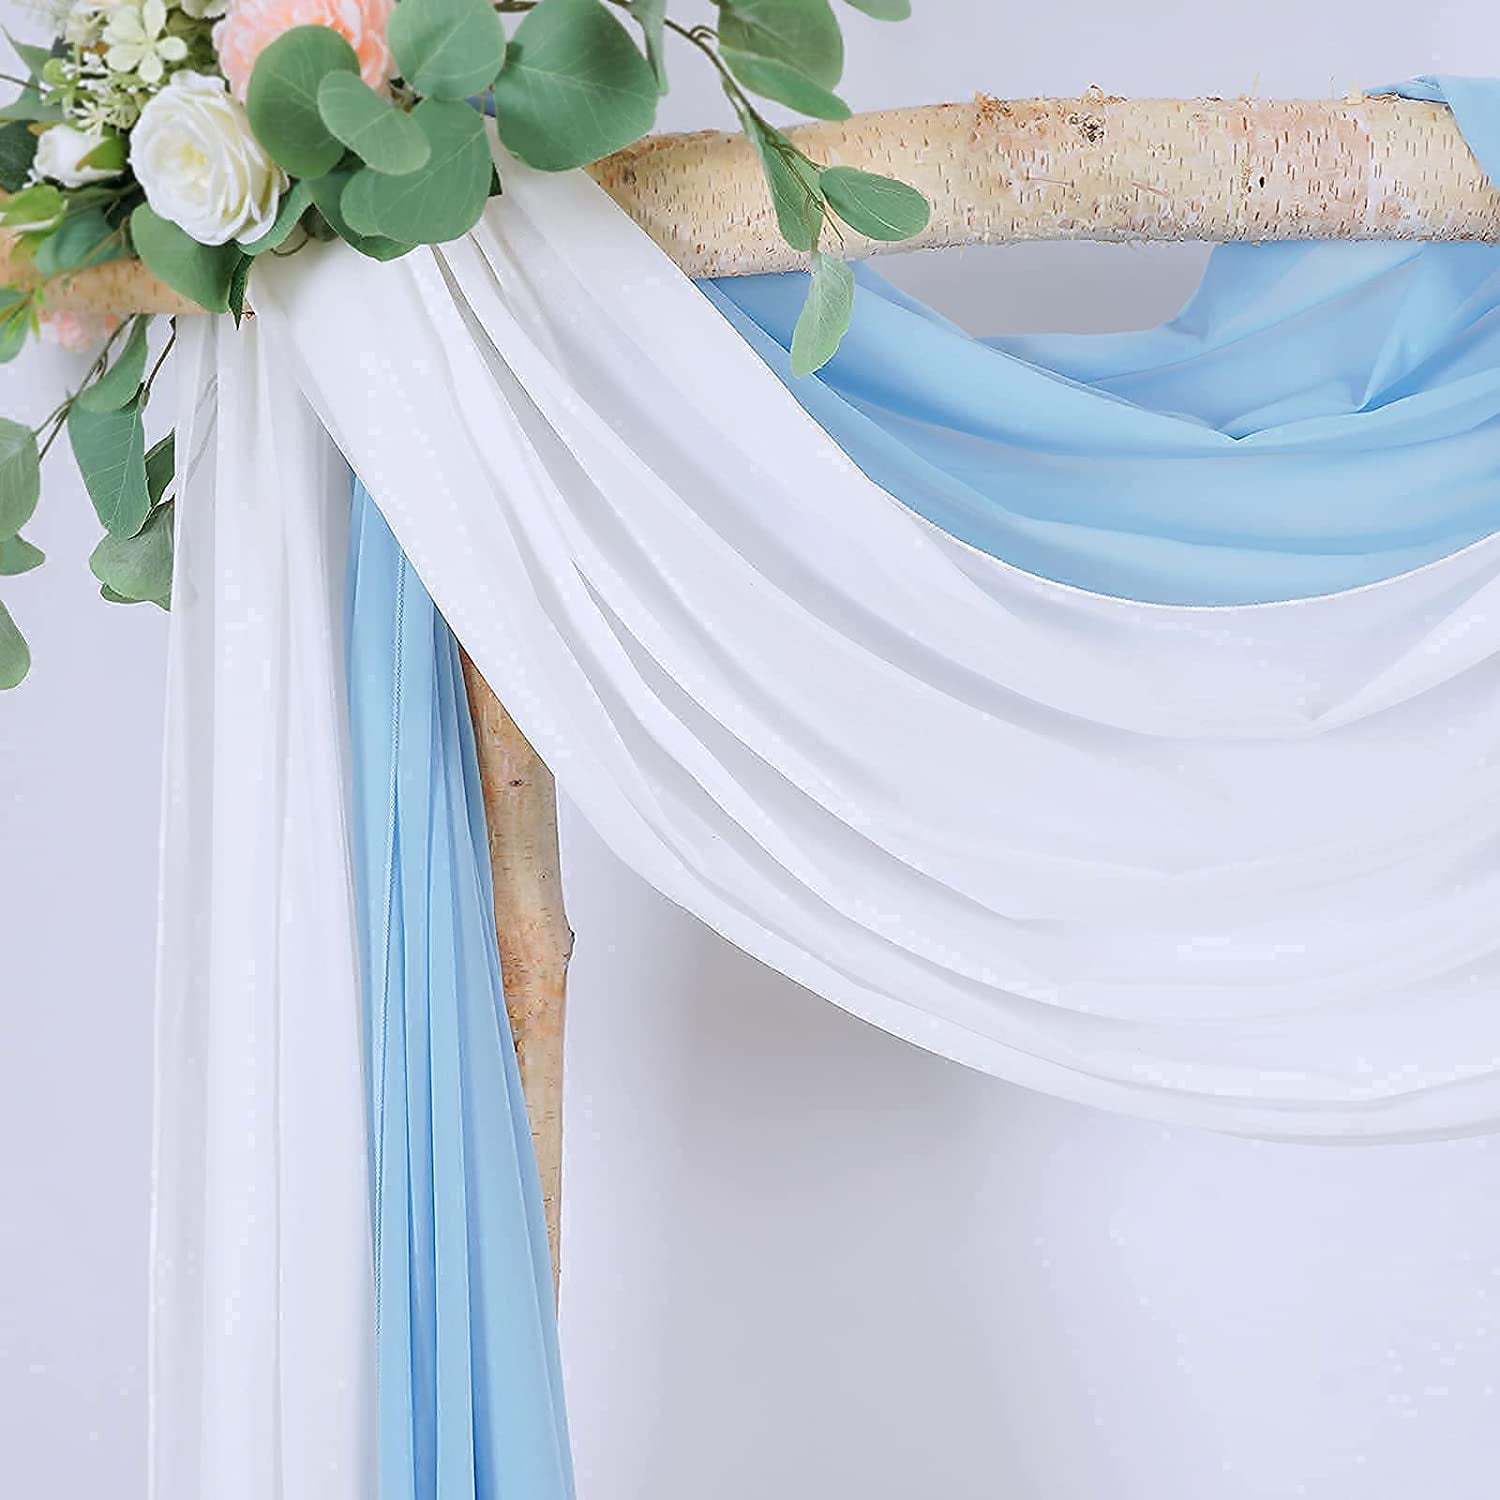 8'x 57" wide Ivory and colors White Wedding drape 2 panel set backdrop. 